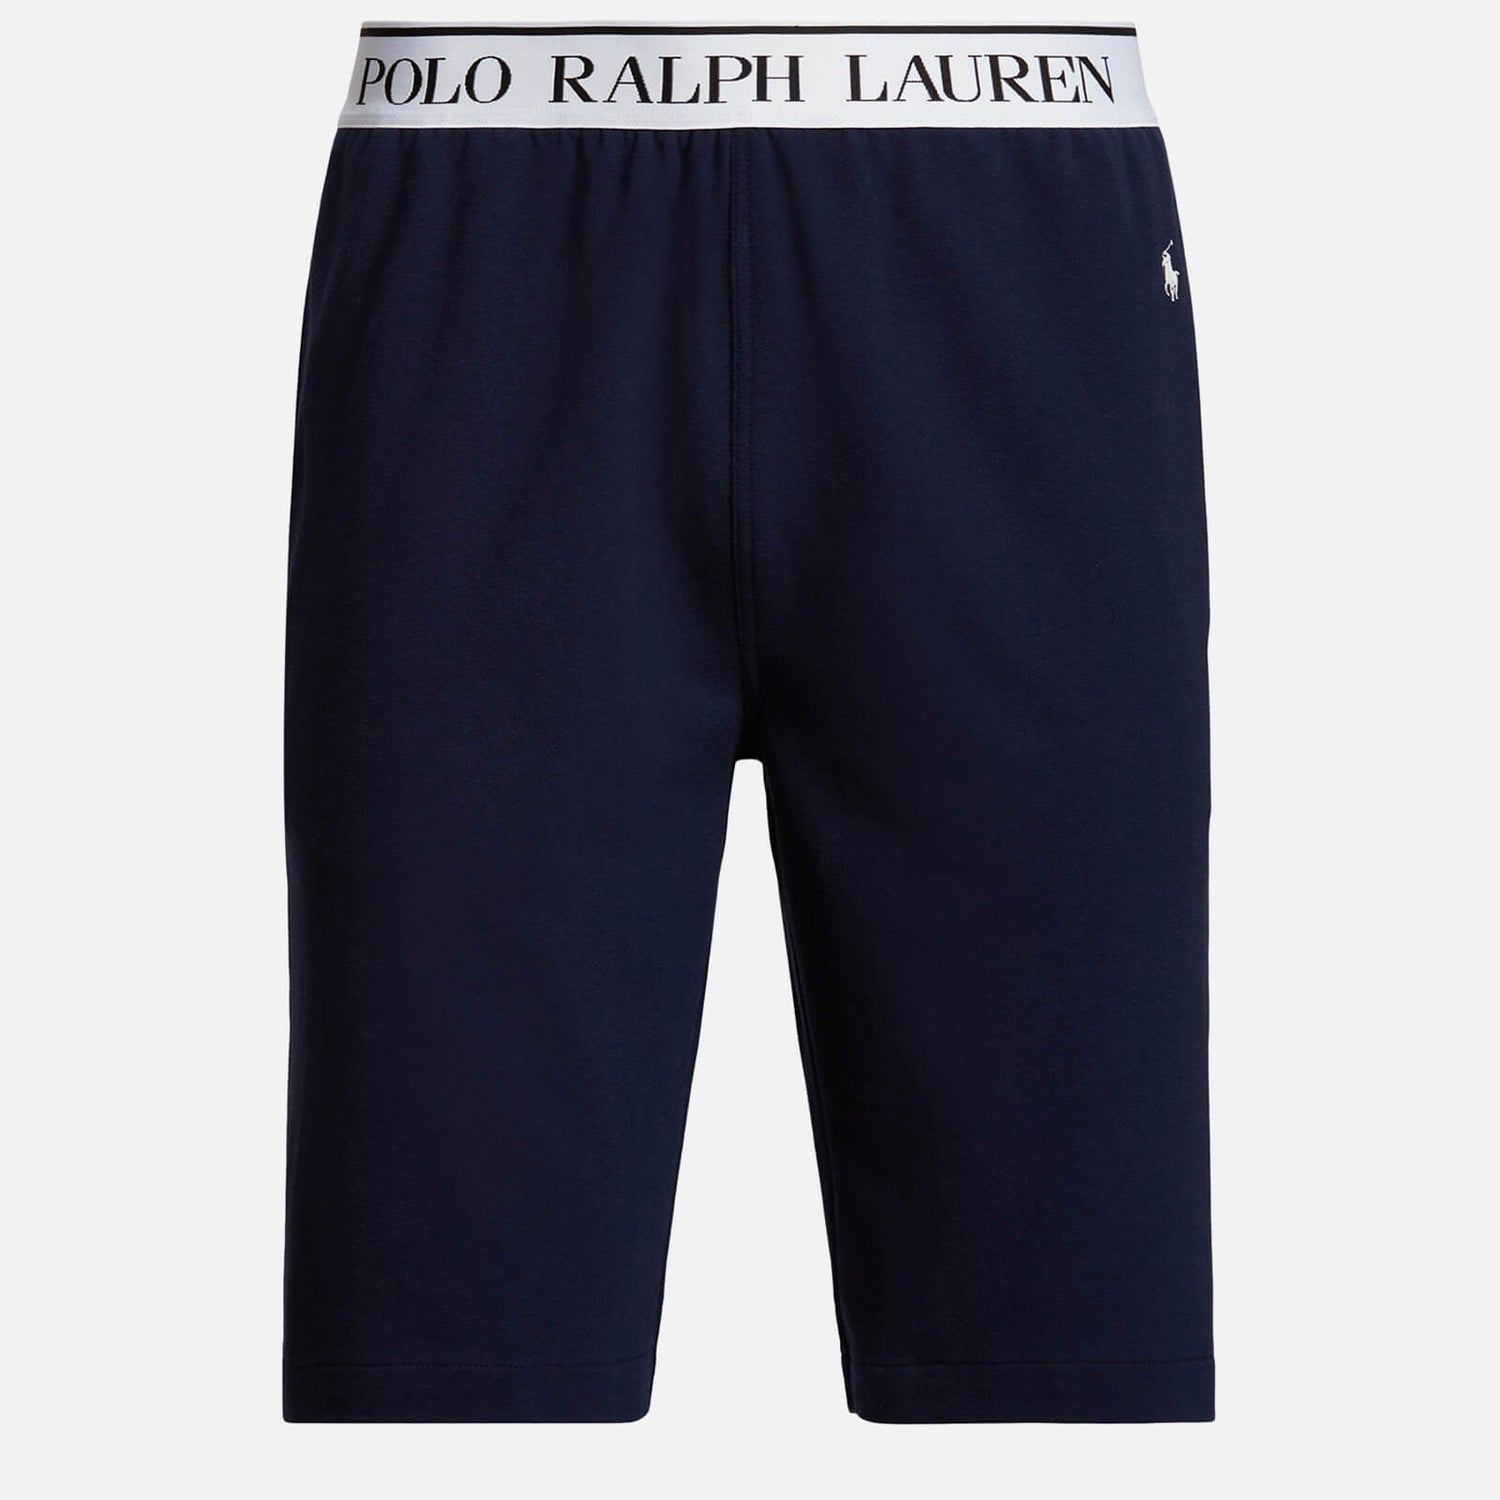 Polo Ralph Lauren Men's Lightweight Fleece Sleep Shorts - Cruise Navy - S